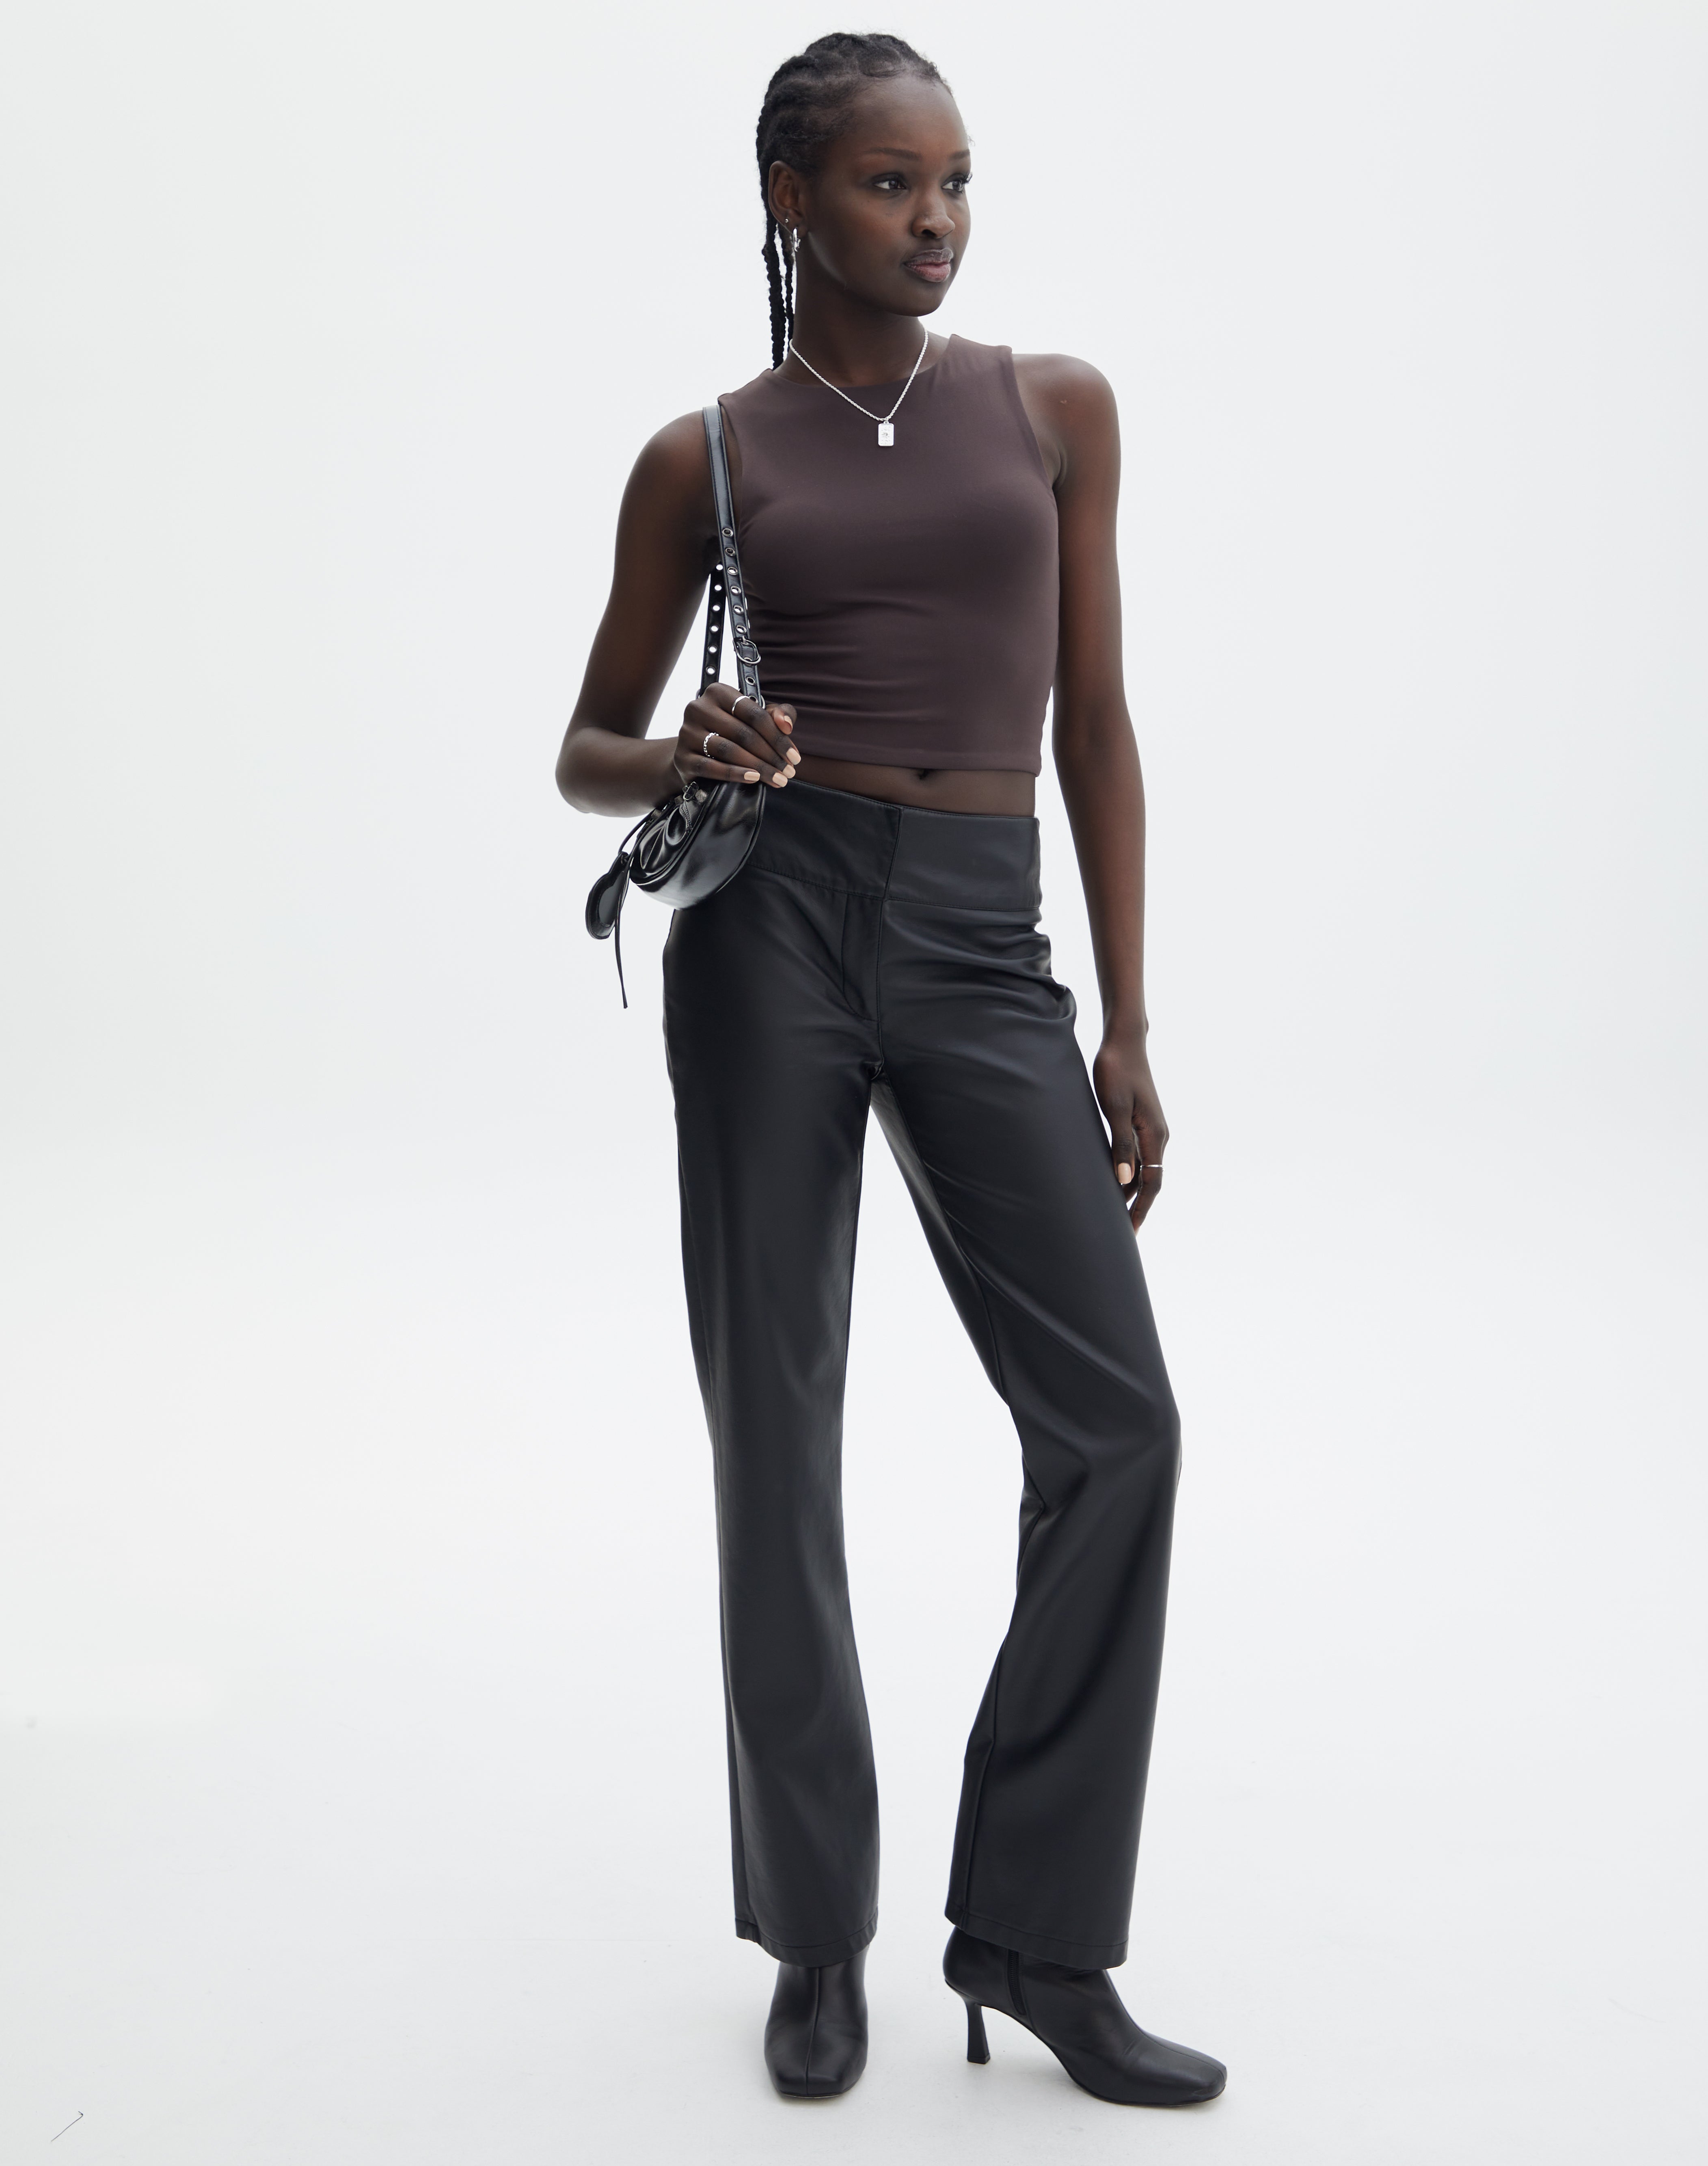 Chloe Leather Pants in Black  PULZ JEANS  Repertoire